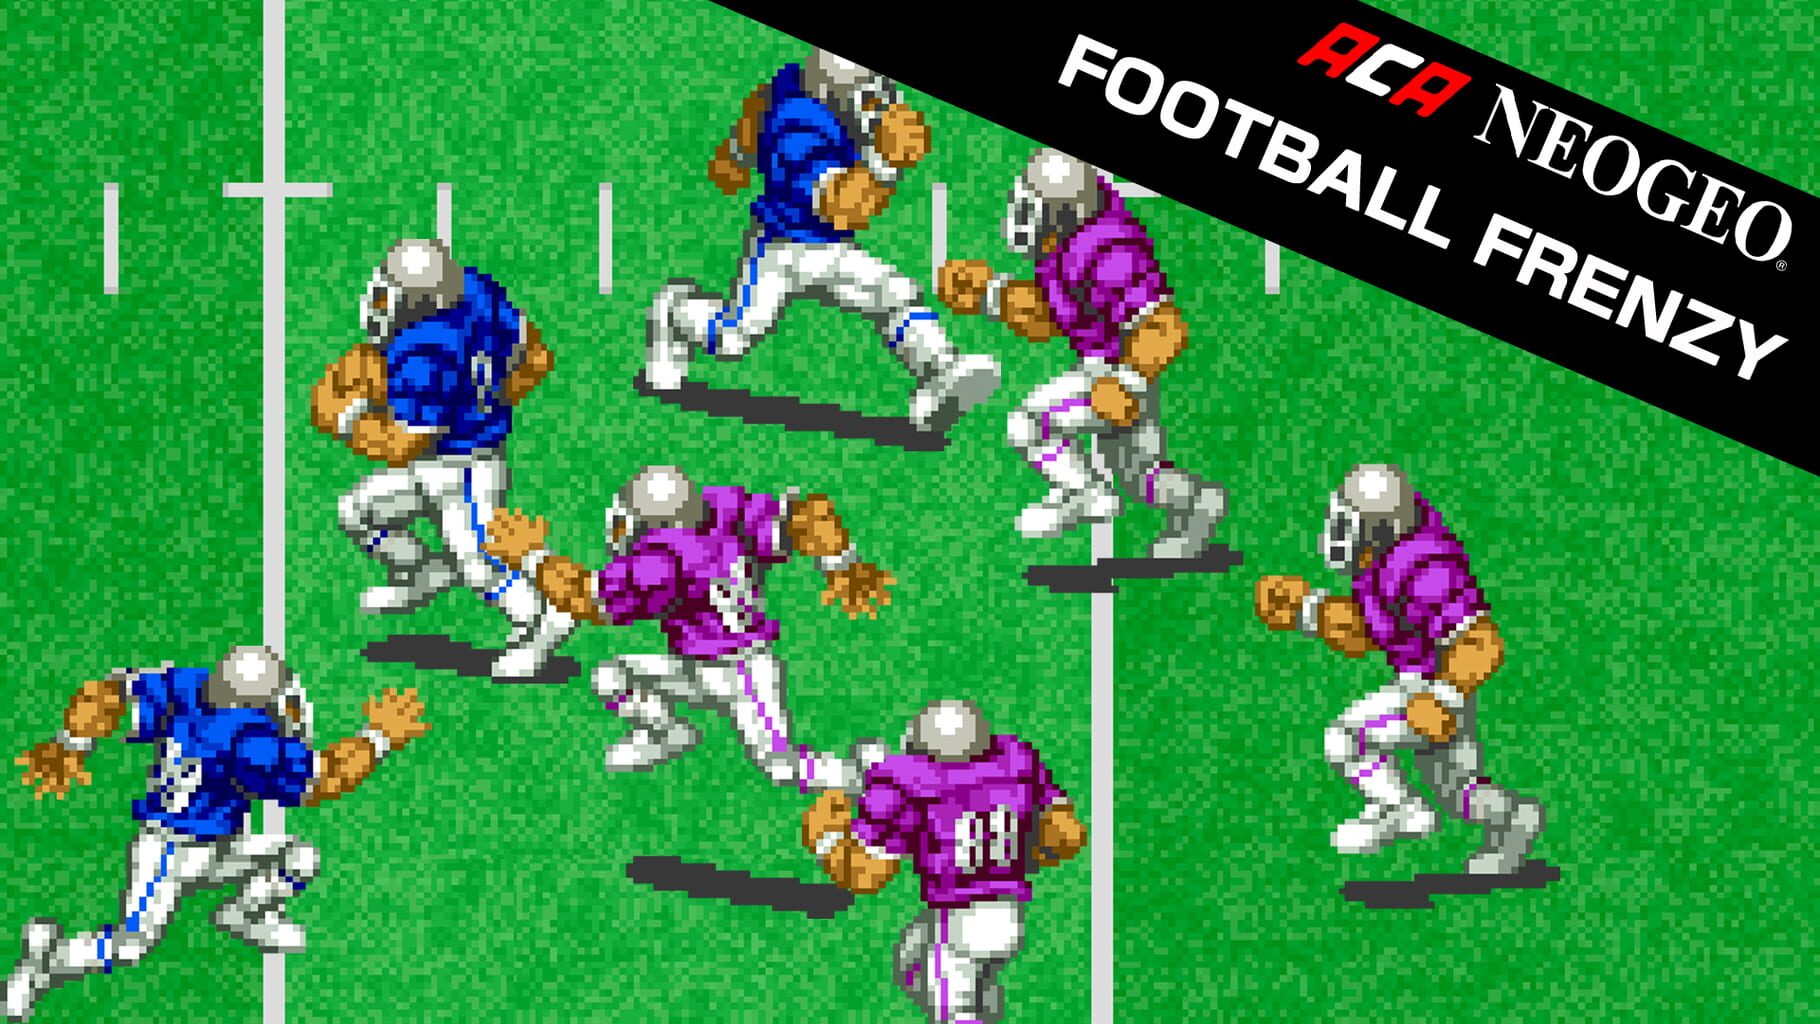 Arte - ACA Neo Geo: Football frenzy